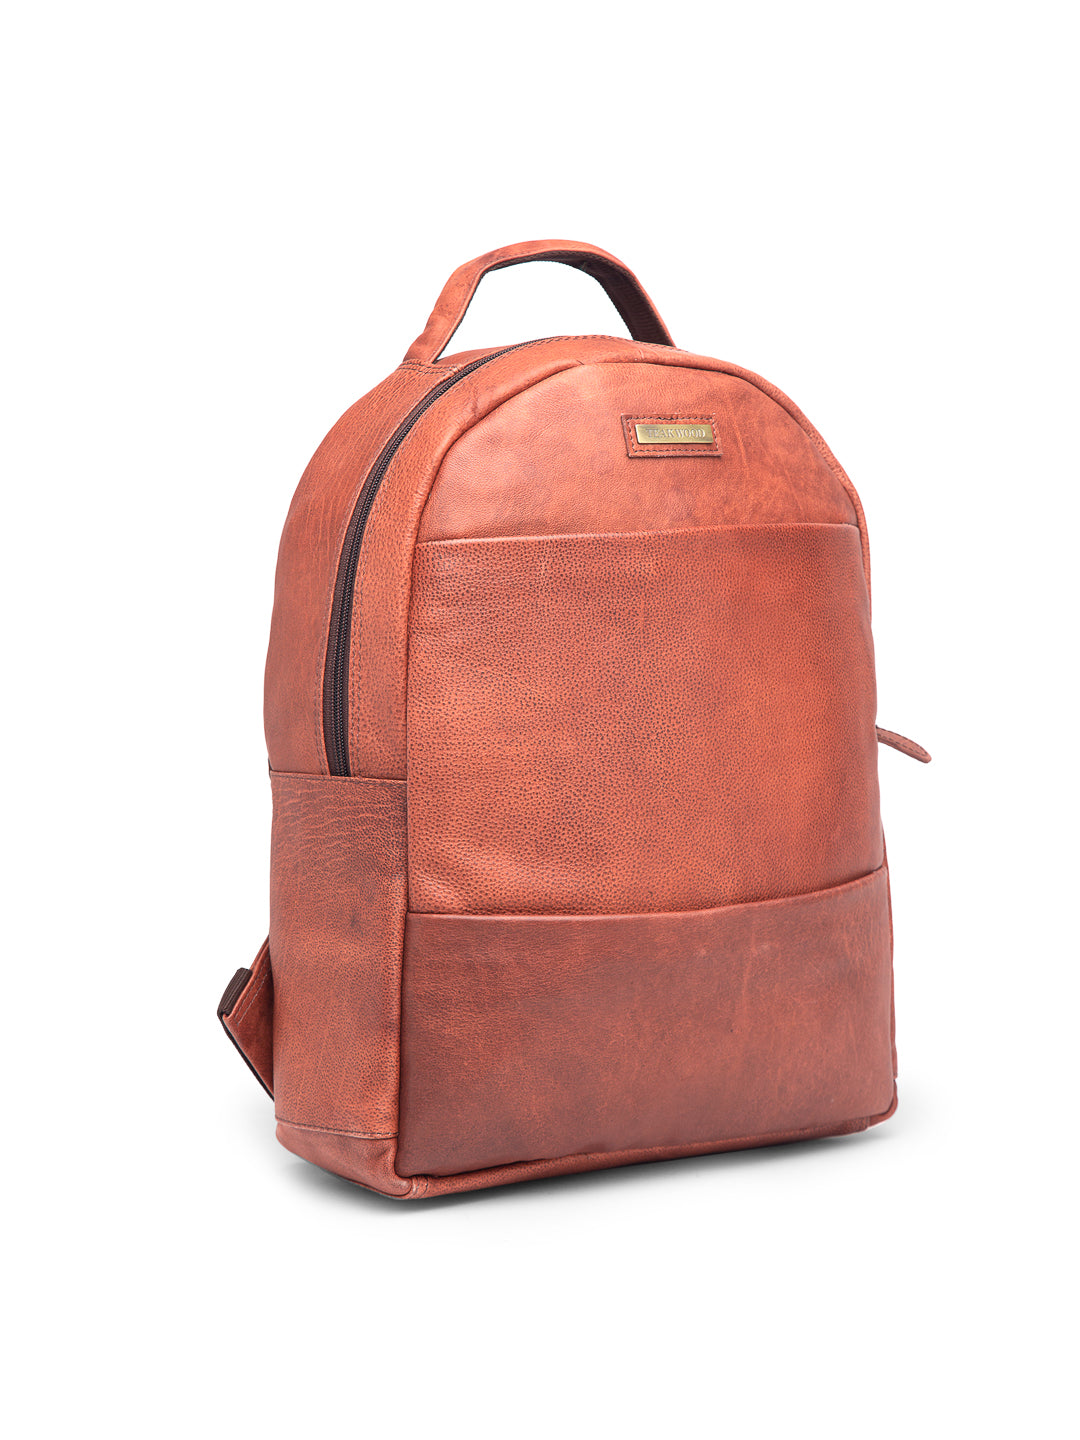 Leather Backpacks | Portland Leather Goods